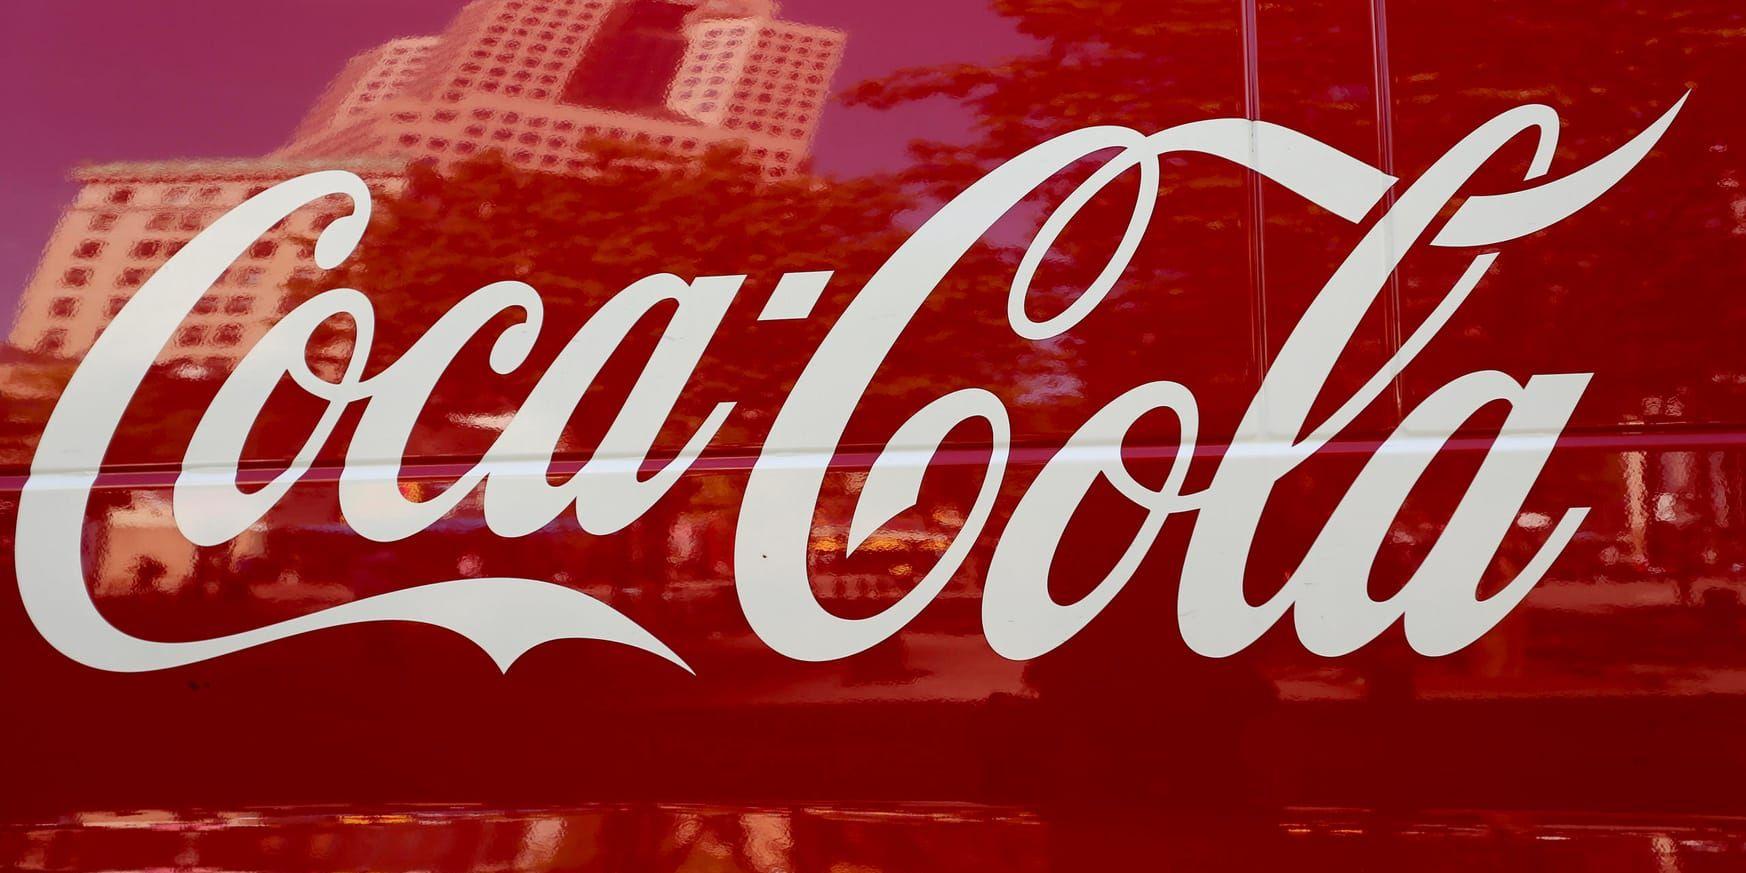 Coca-Cola uppges ha påverkat forskning i Frankrike genom ekonomiska bidrag. Arkivbild.